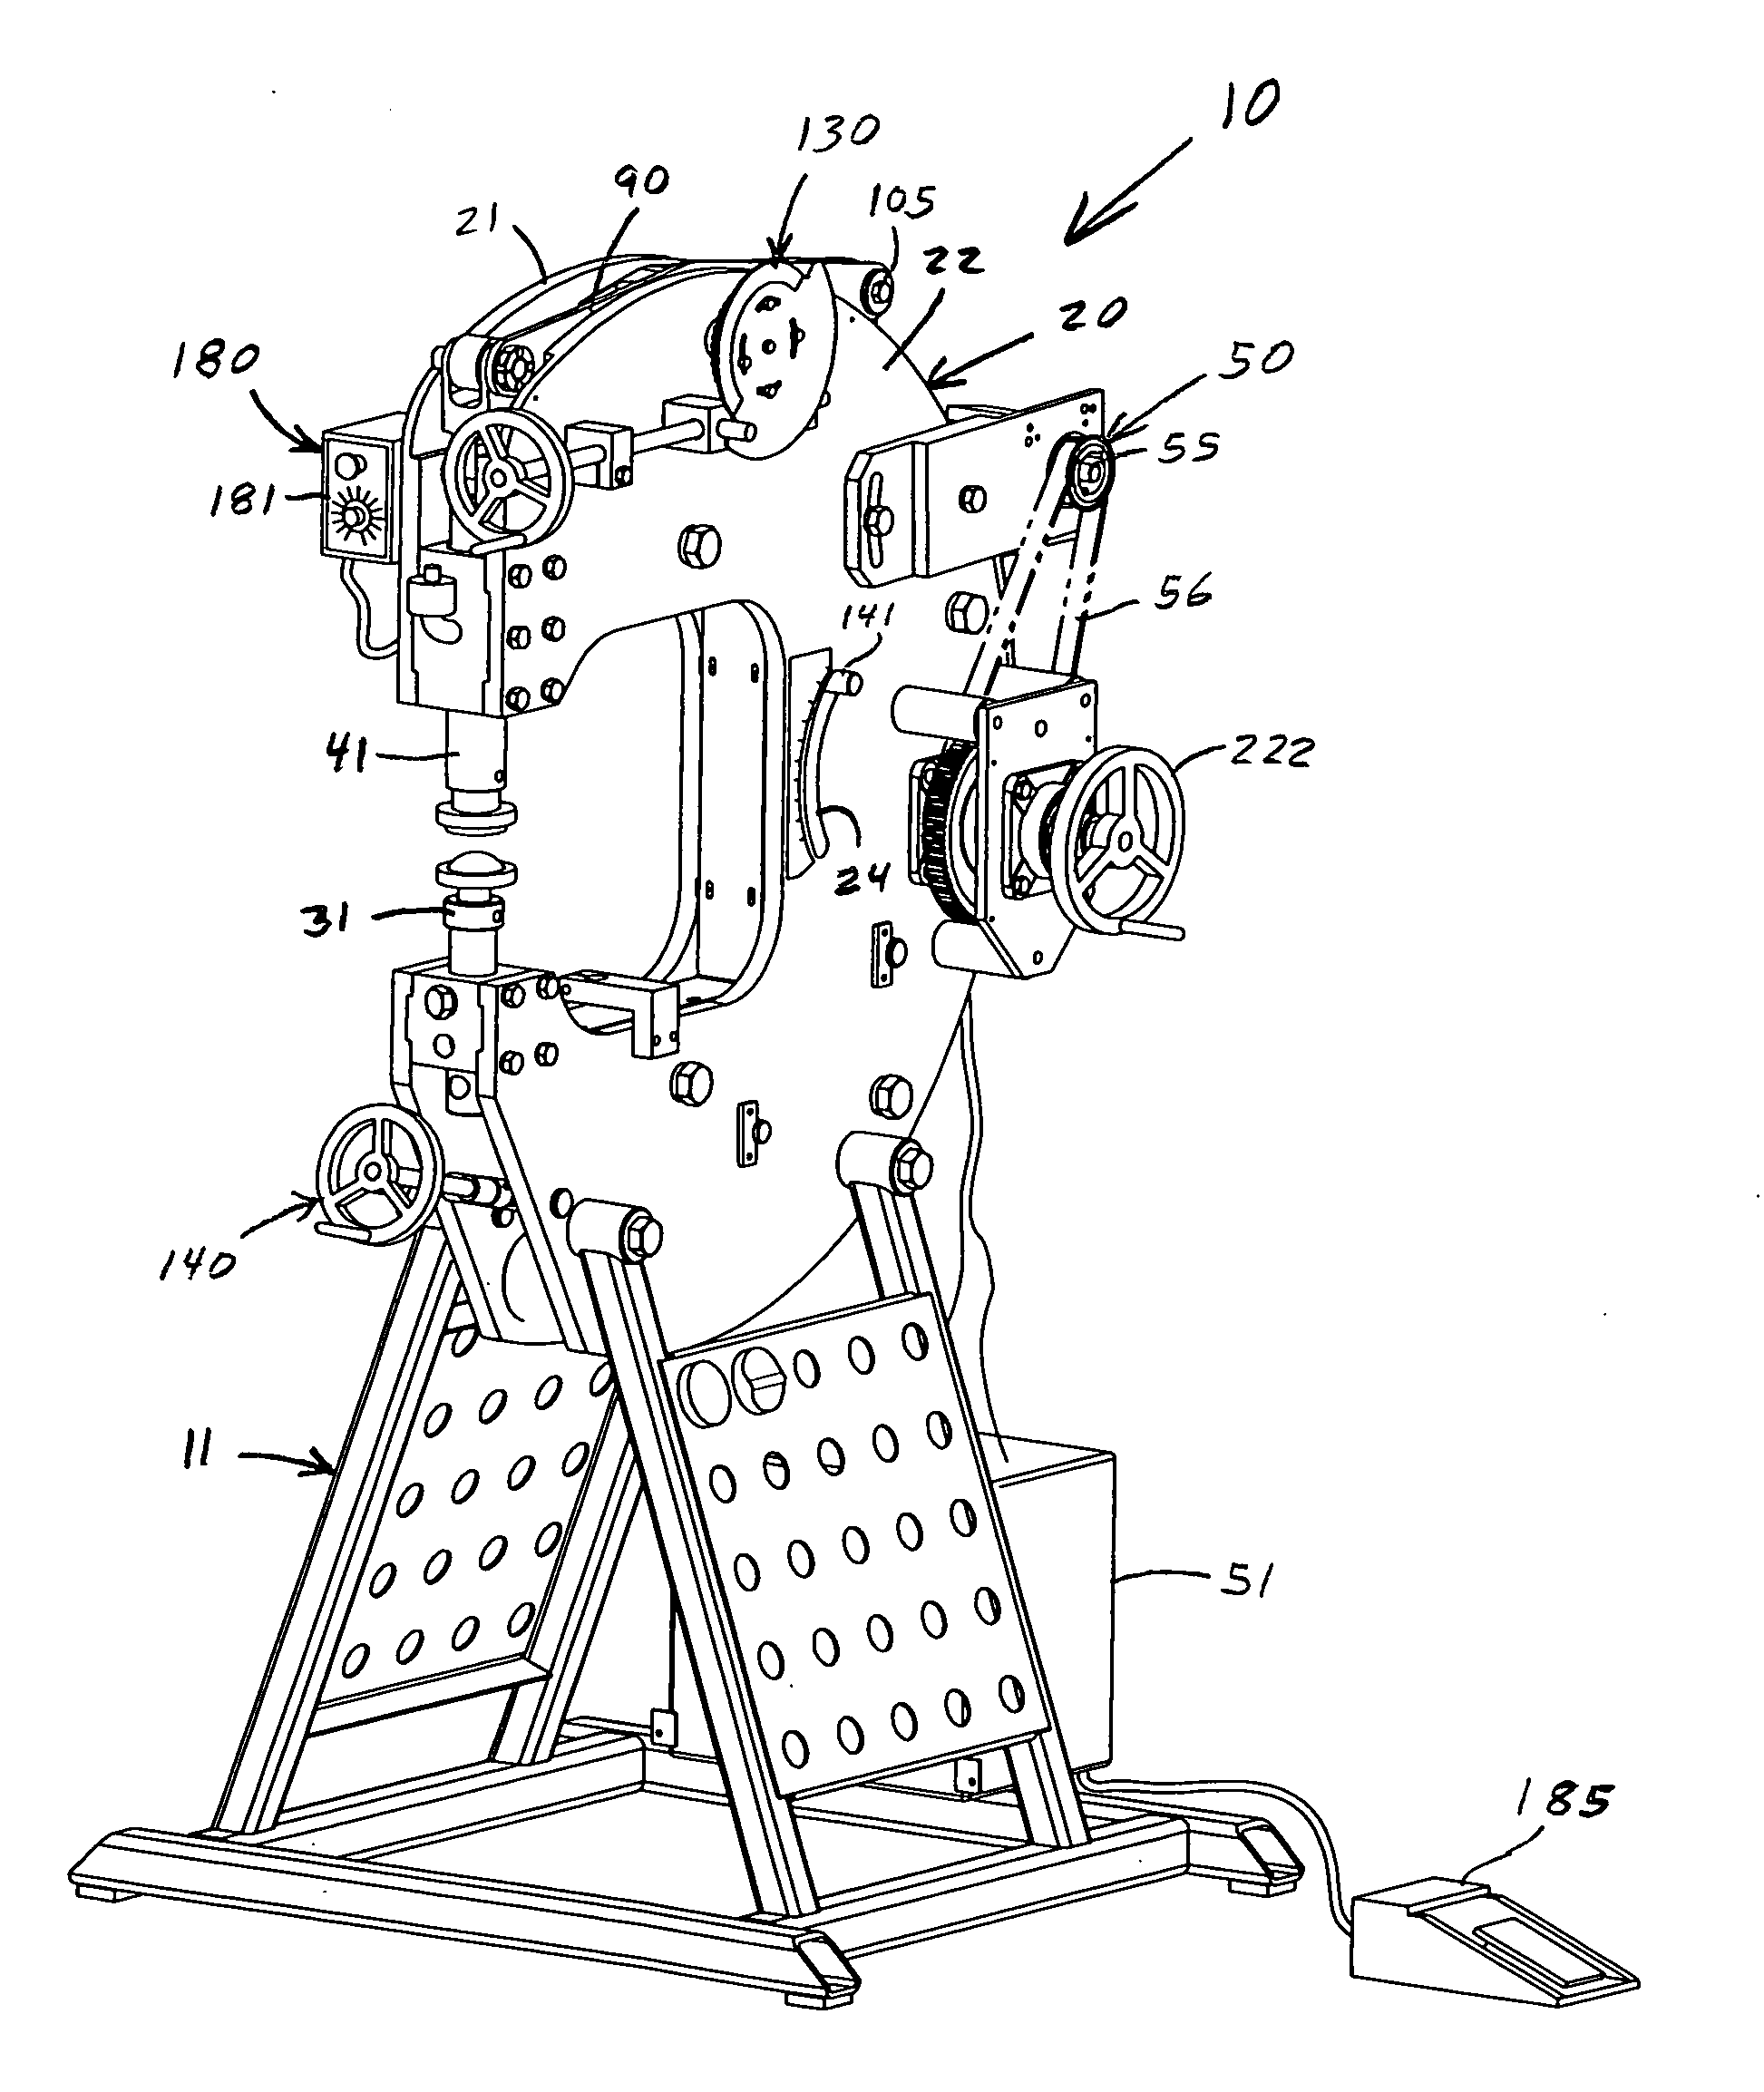 Multi-mode hammering machine